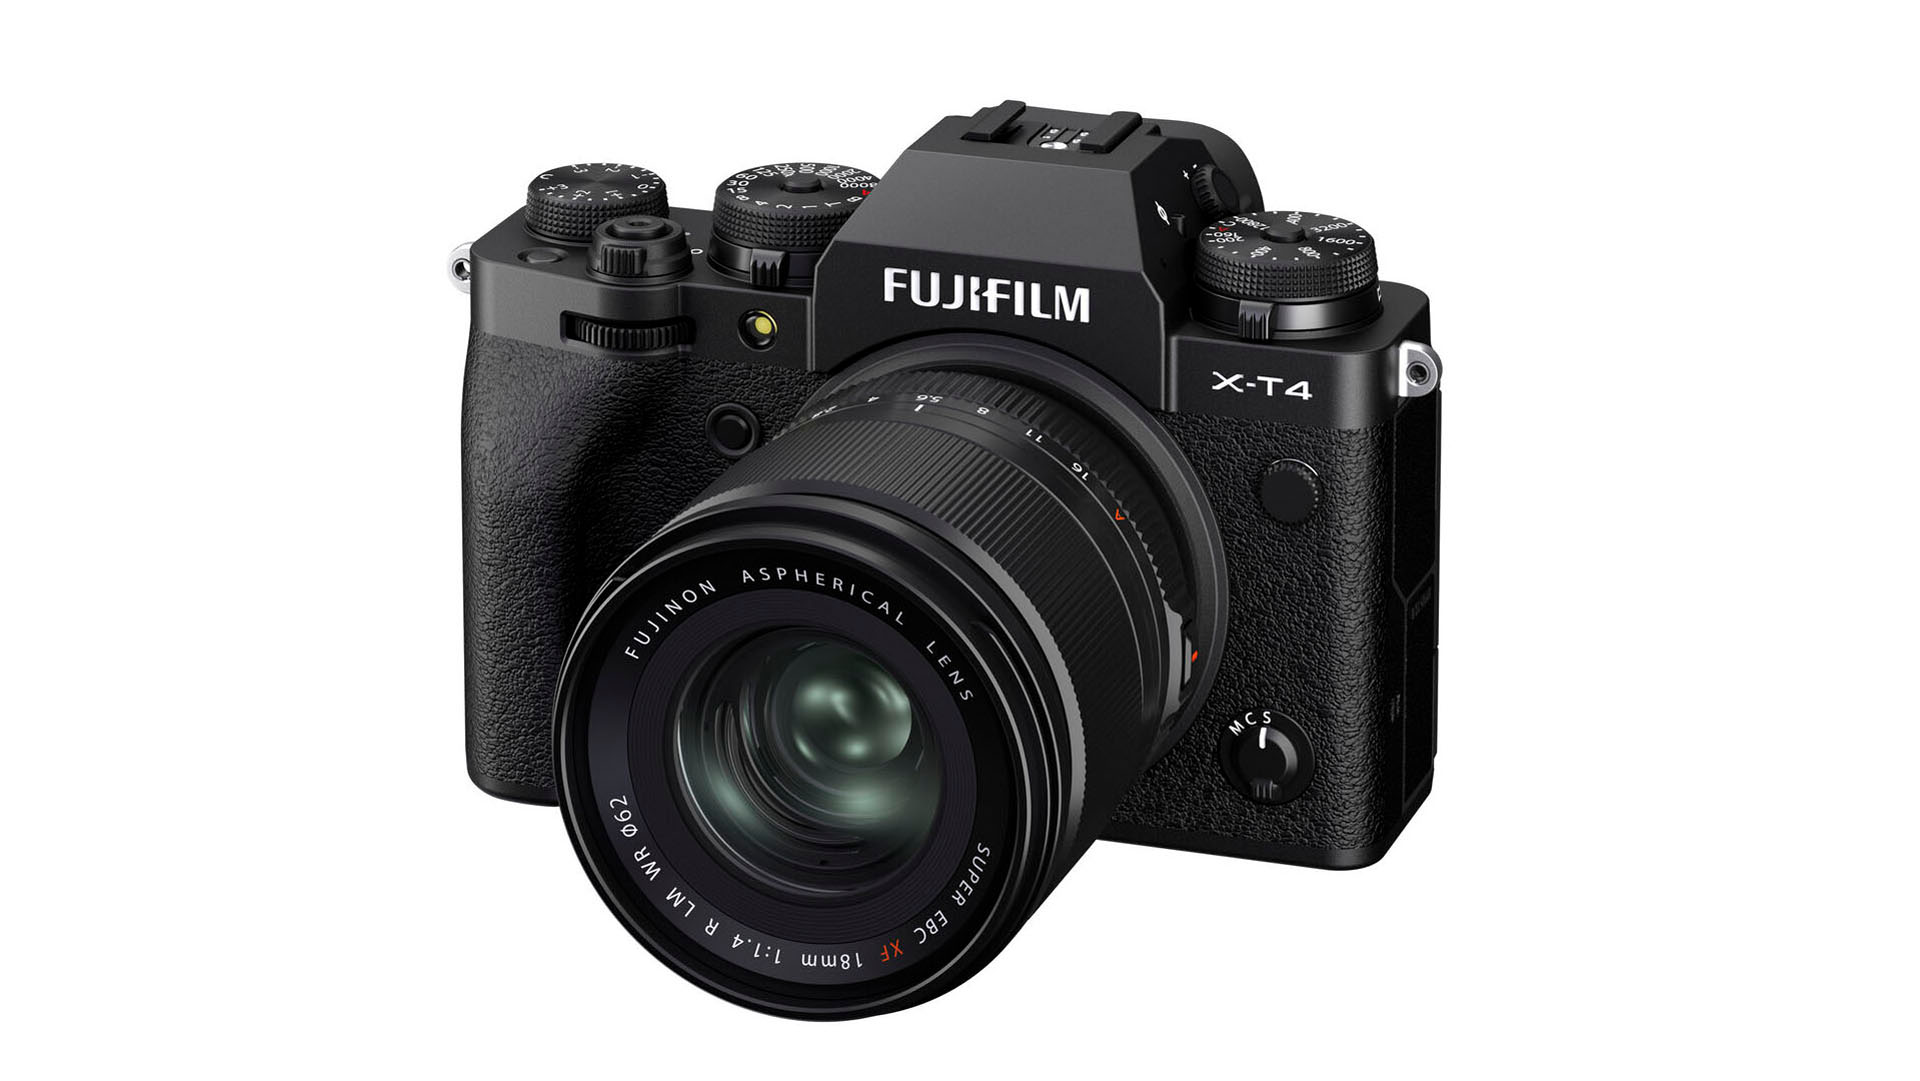 Fujifilm XF 18mm productshot